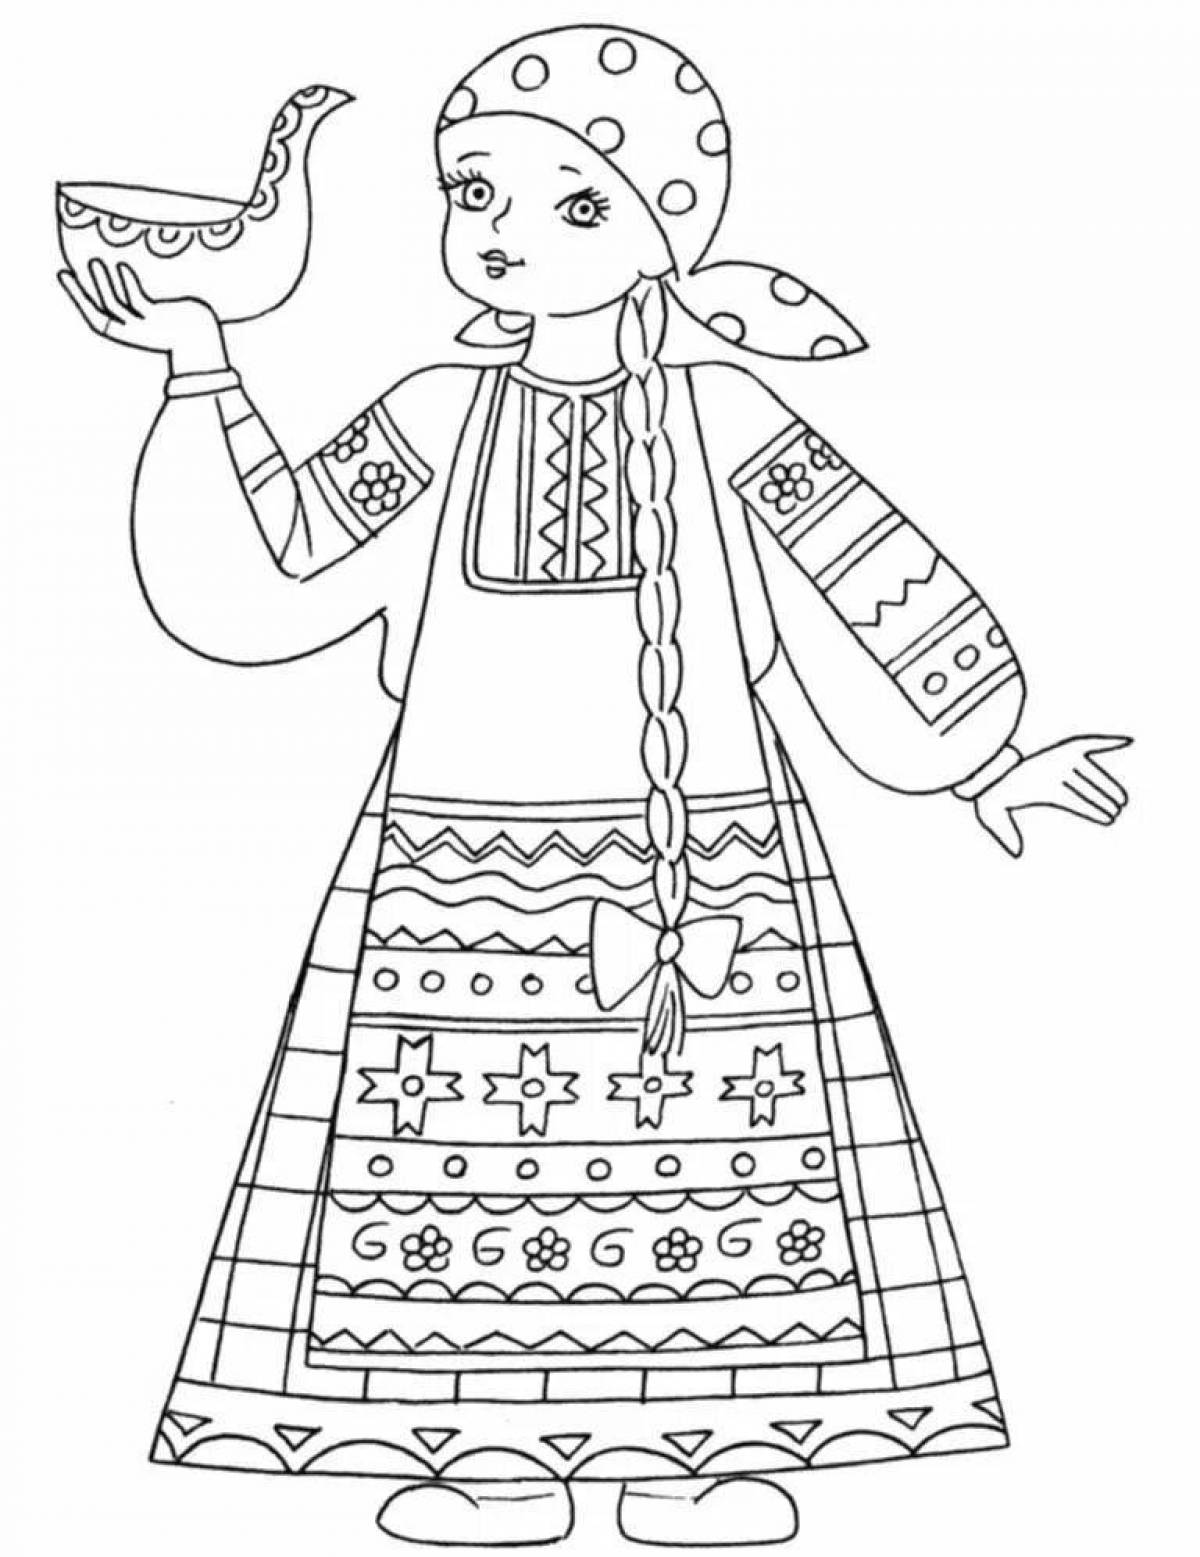 Coloring page joyful Chuvash national costume